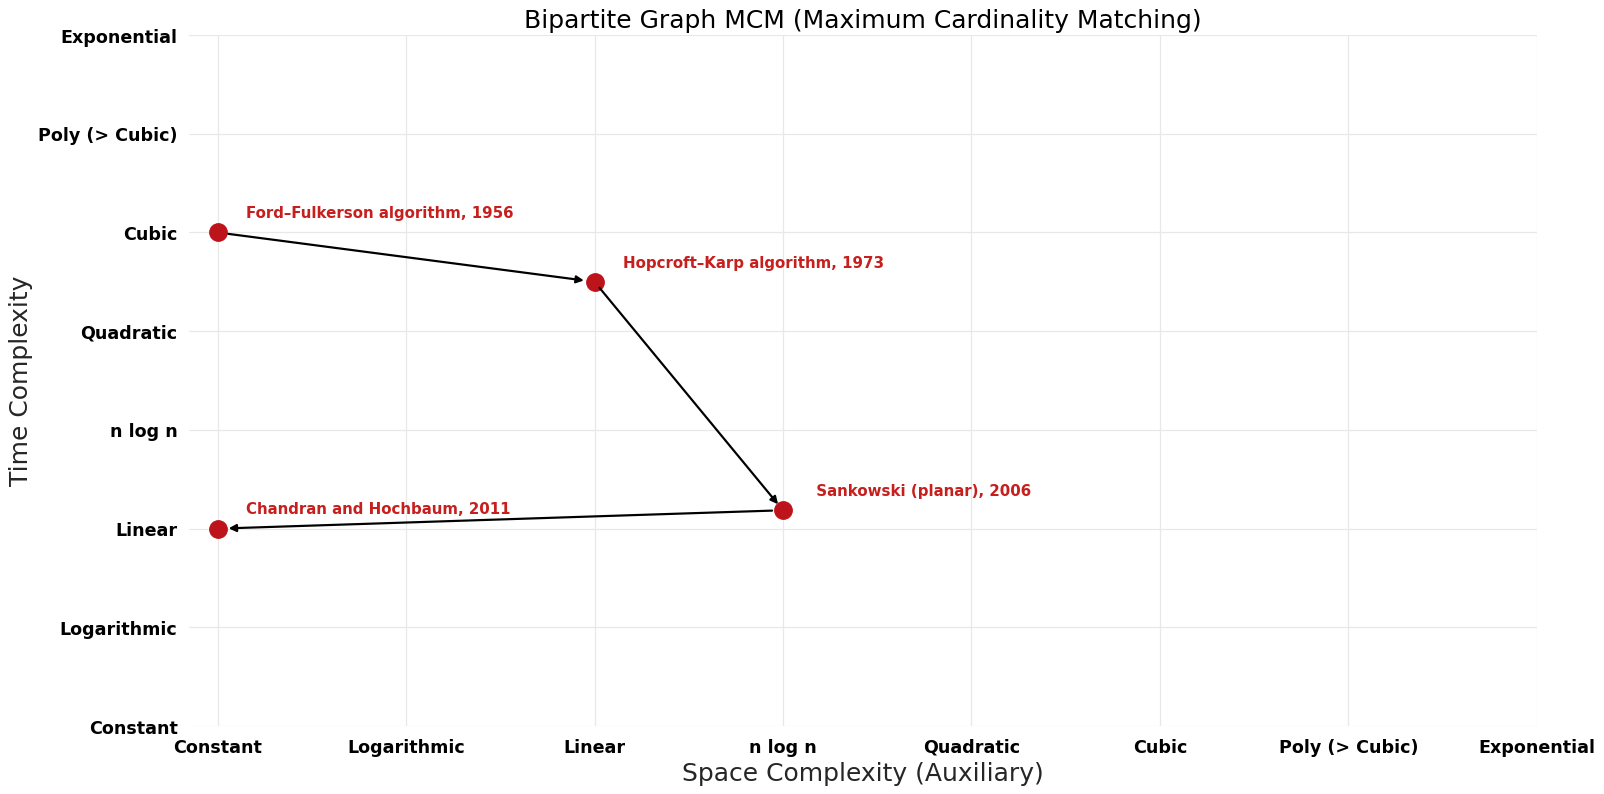 File:Maximum Cardinality Matching - Bipartite Graph MCM - Pareto Frontier.png